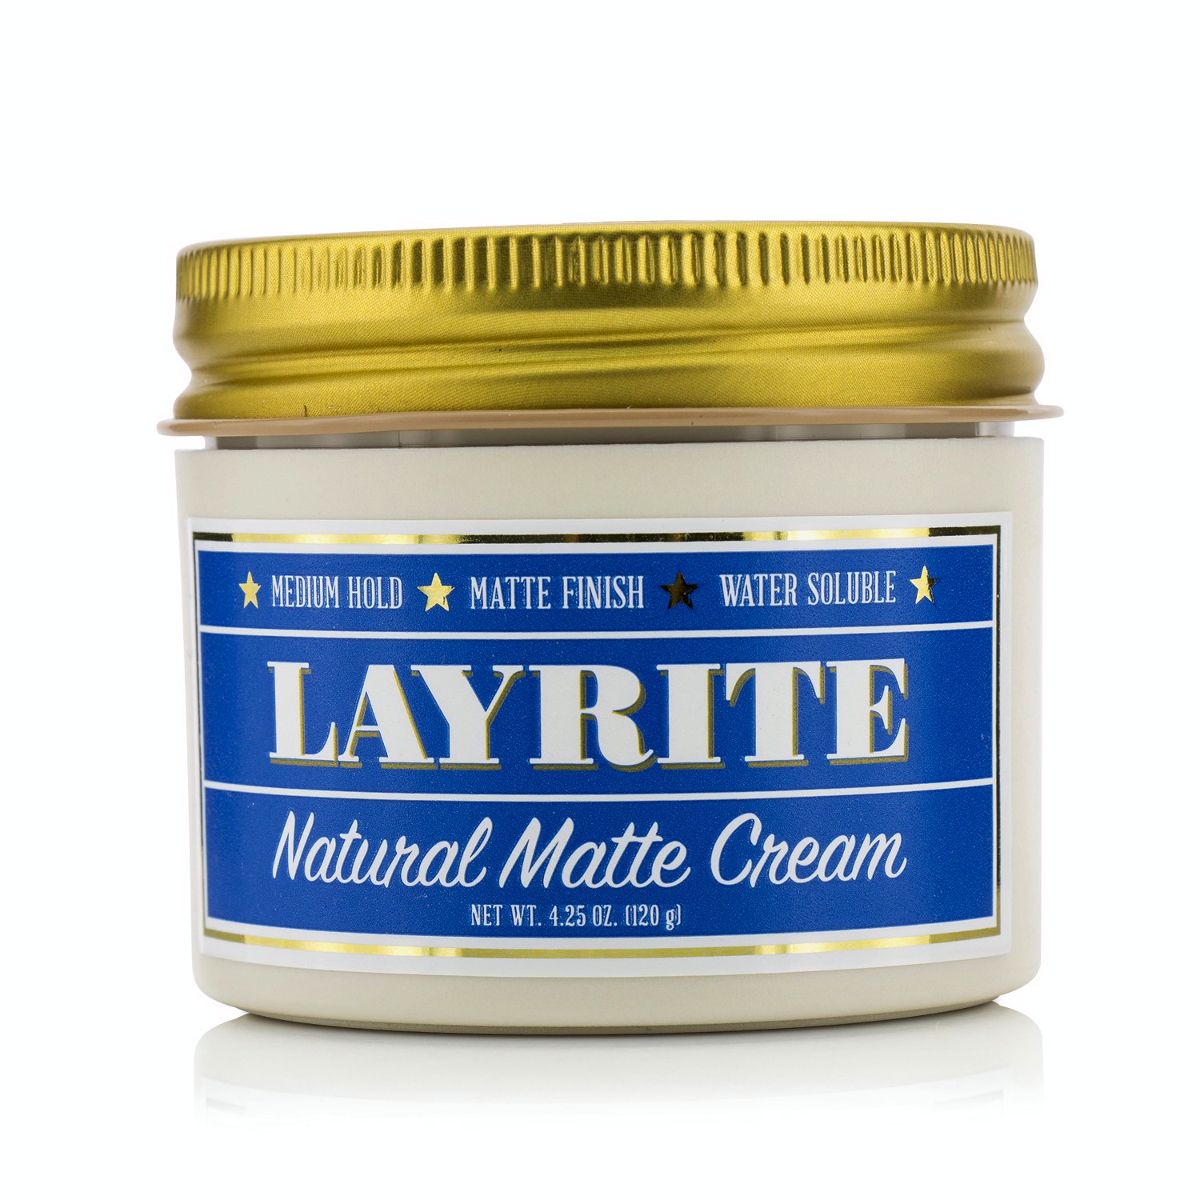 Natural Matte Cream (Medium Hold Matte Finish Water Soluble) Layrite Image